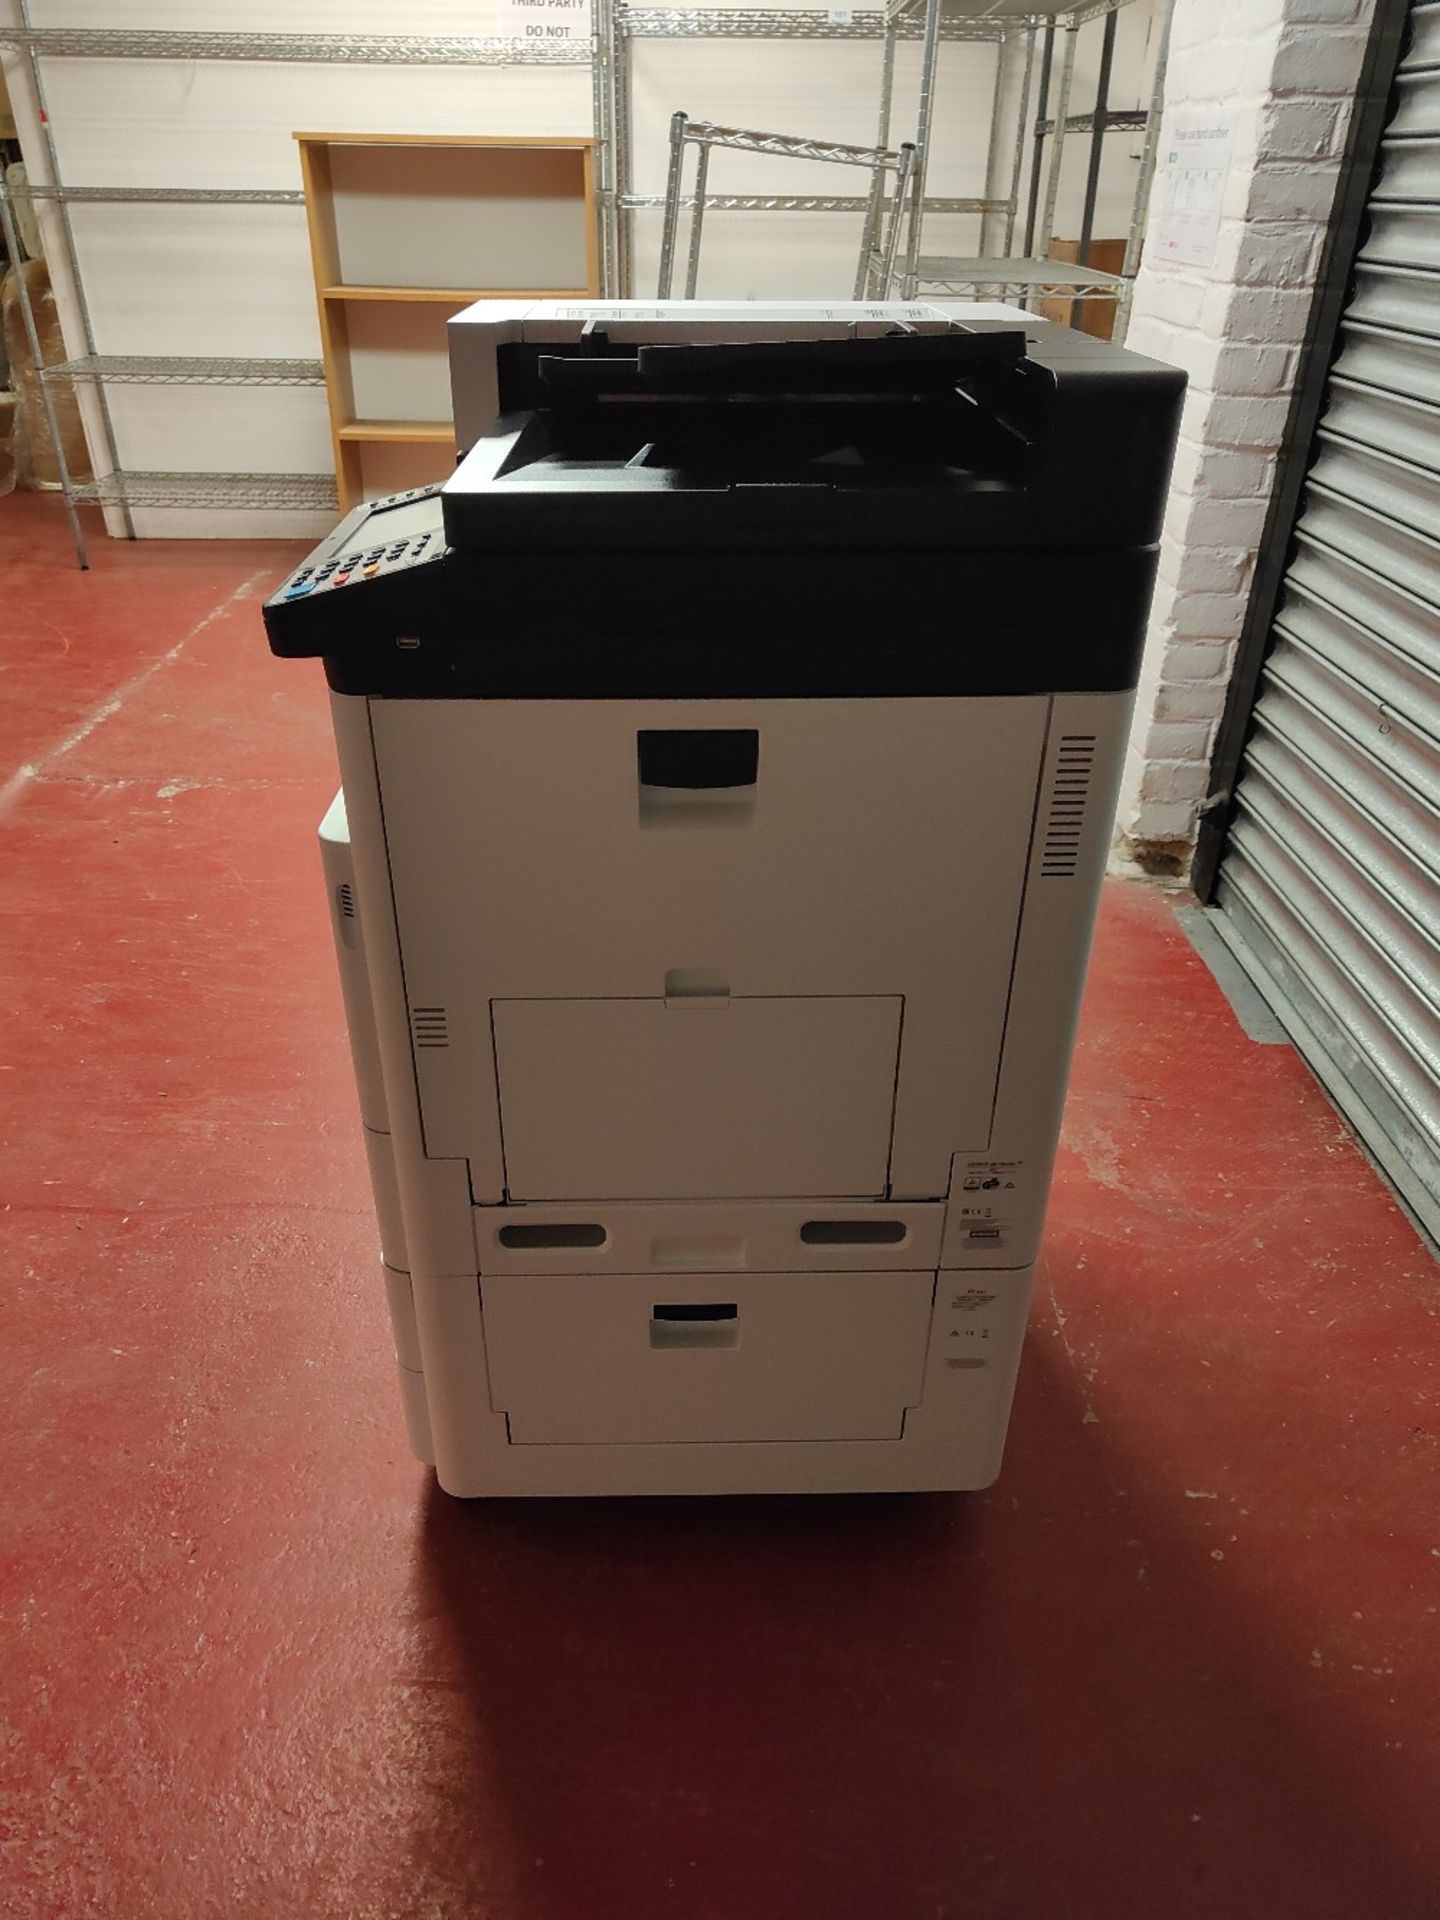 Kyocera Ecosys M8130cidn Colour Laser Multifunction Printer - Image 6 of 9